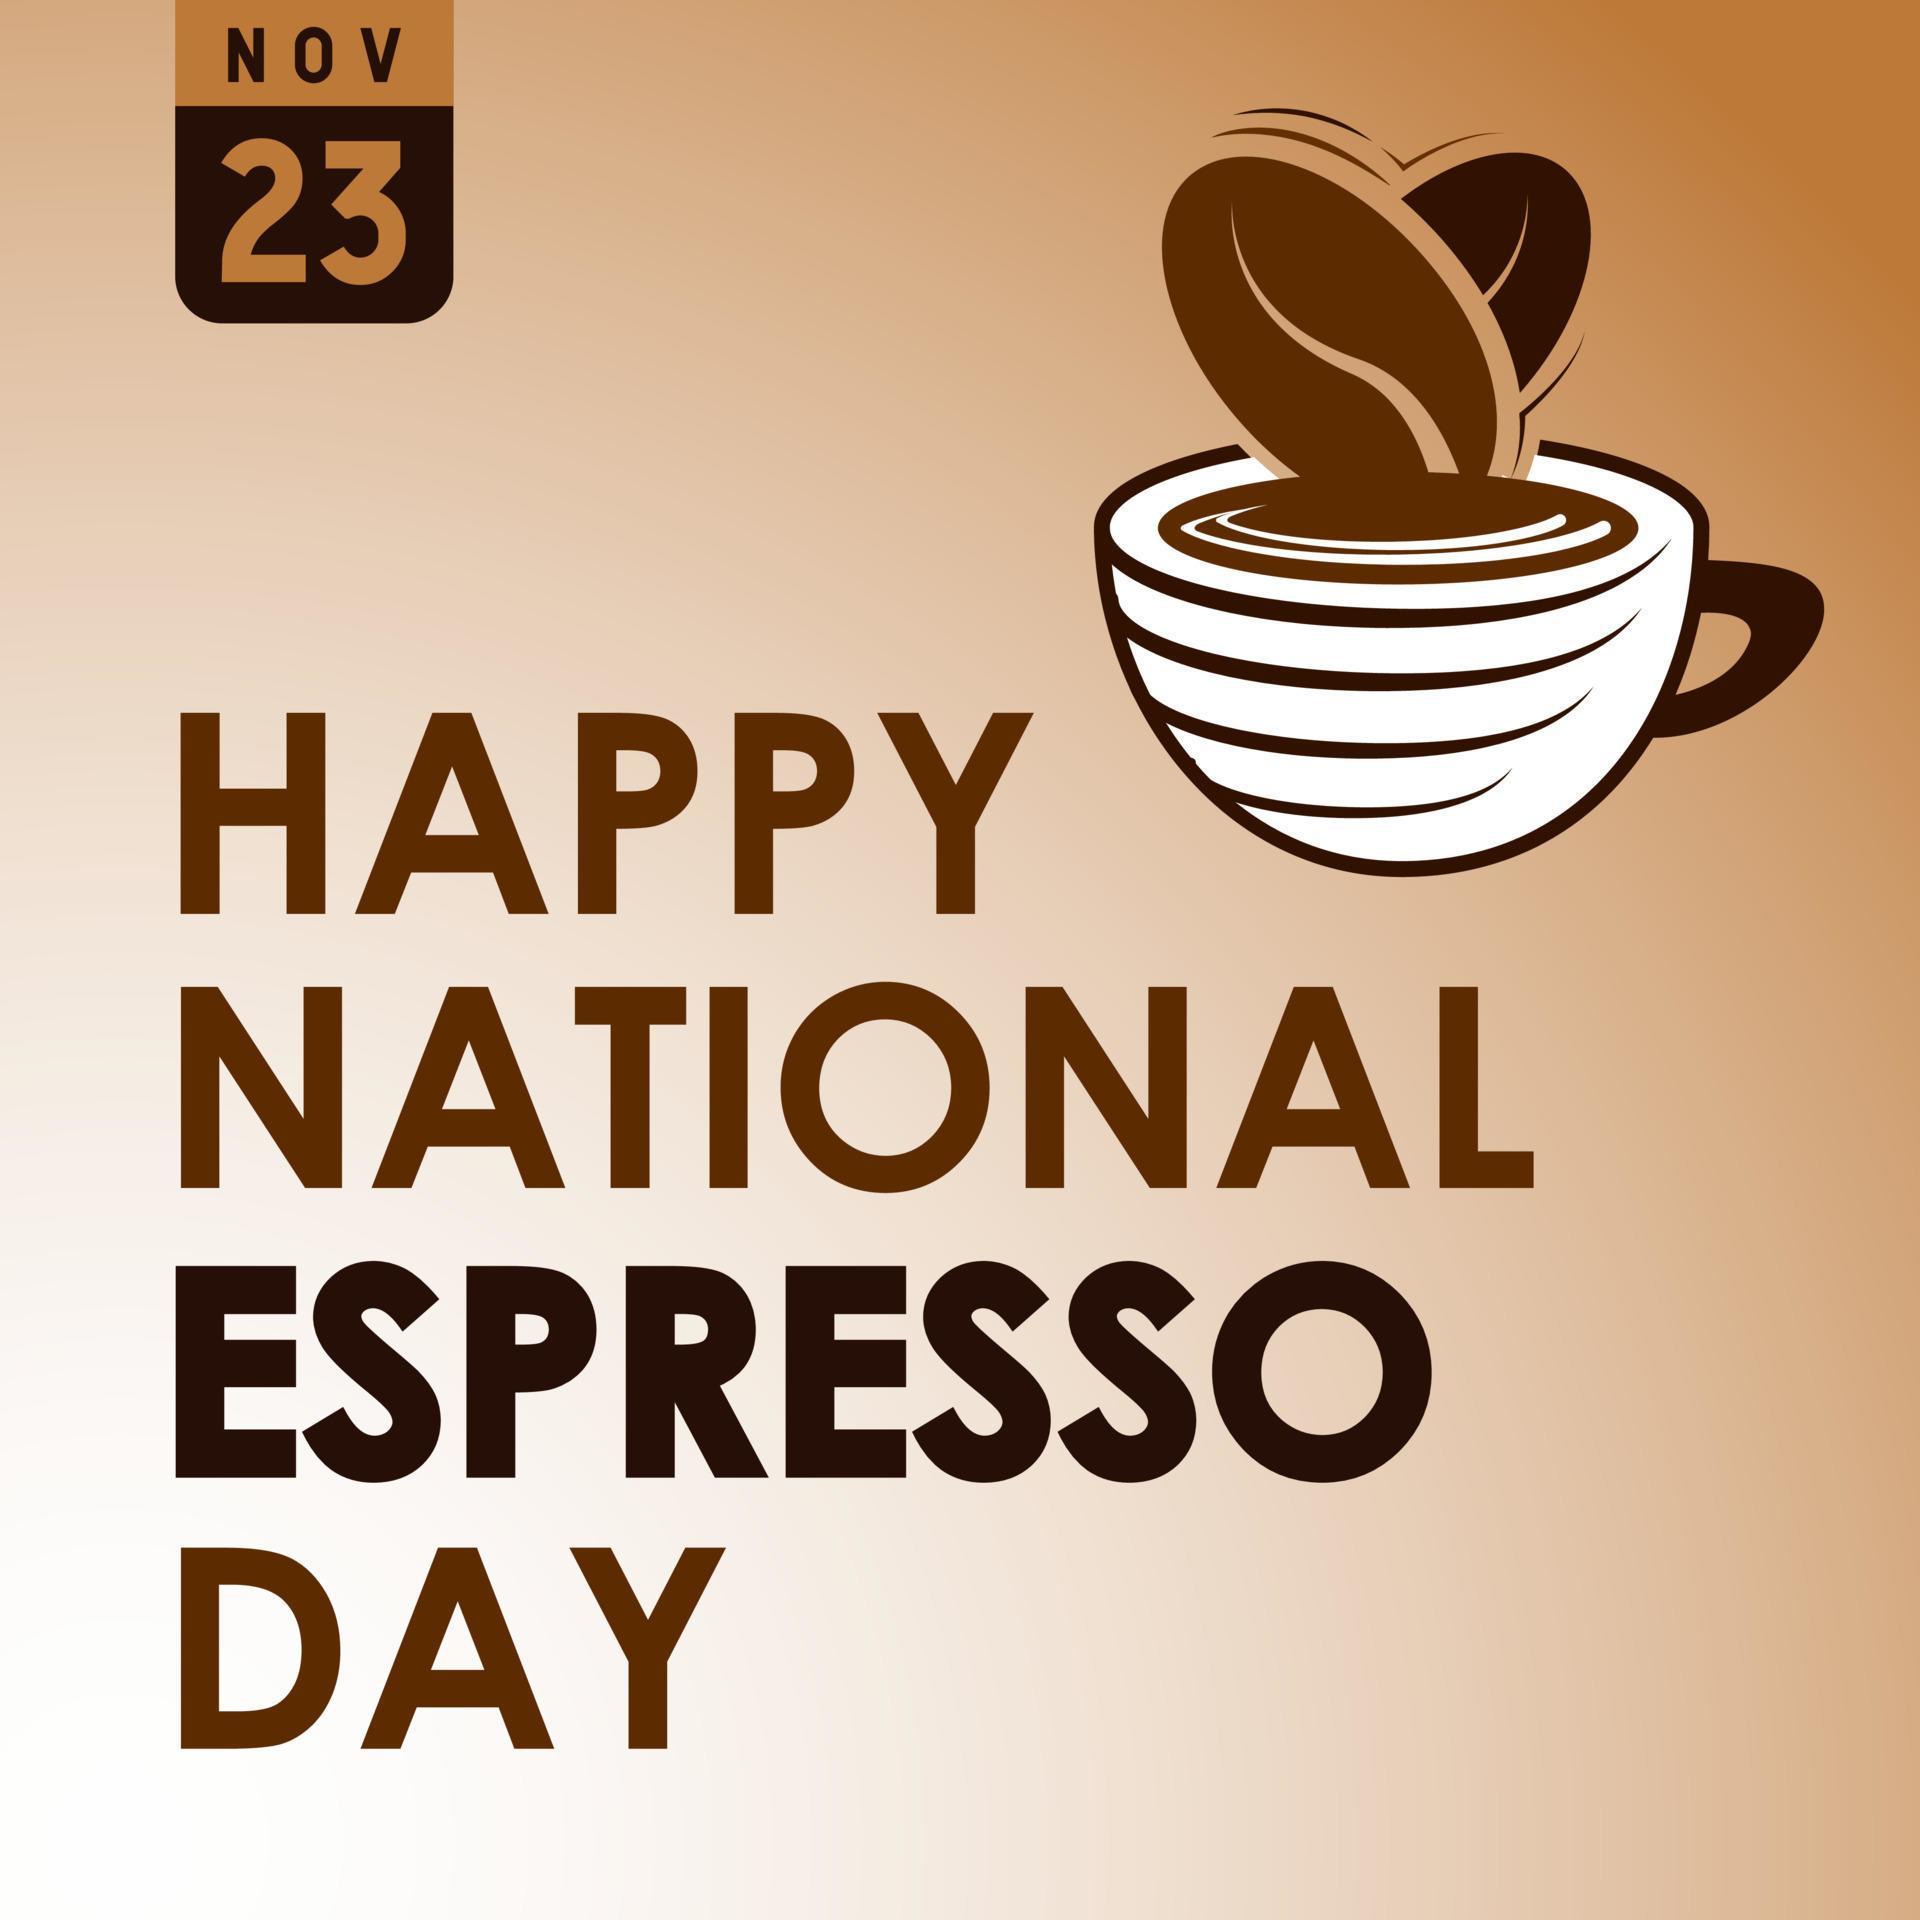 National Espresso Day Background. November 23. Premium and luxury